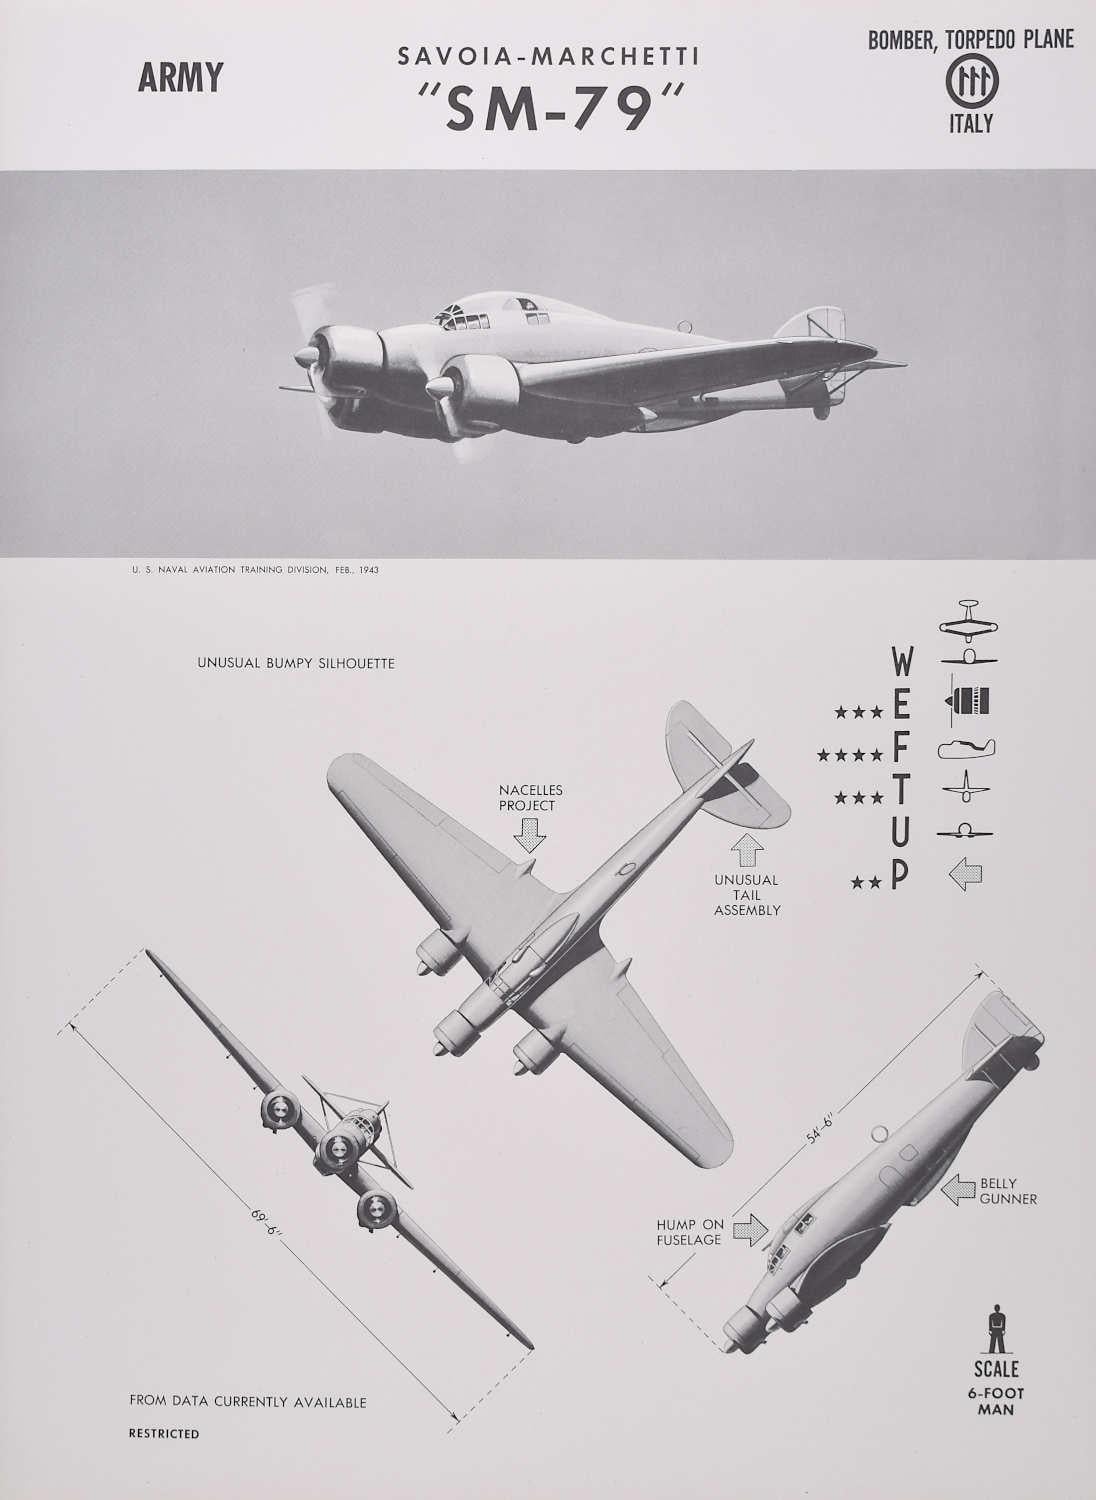 1943 Savoia-Marchetti "SM-79" Italian bomber plane identification poster WW2 - Print by Unknown